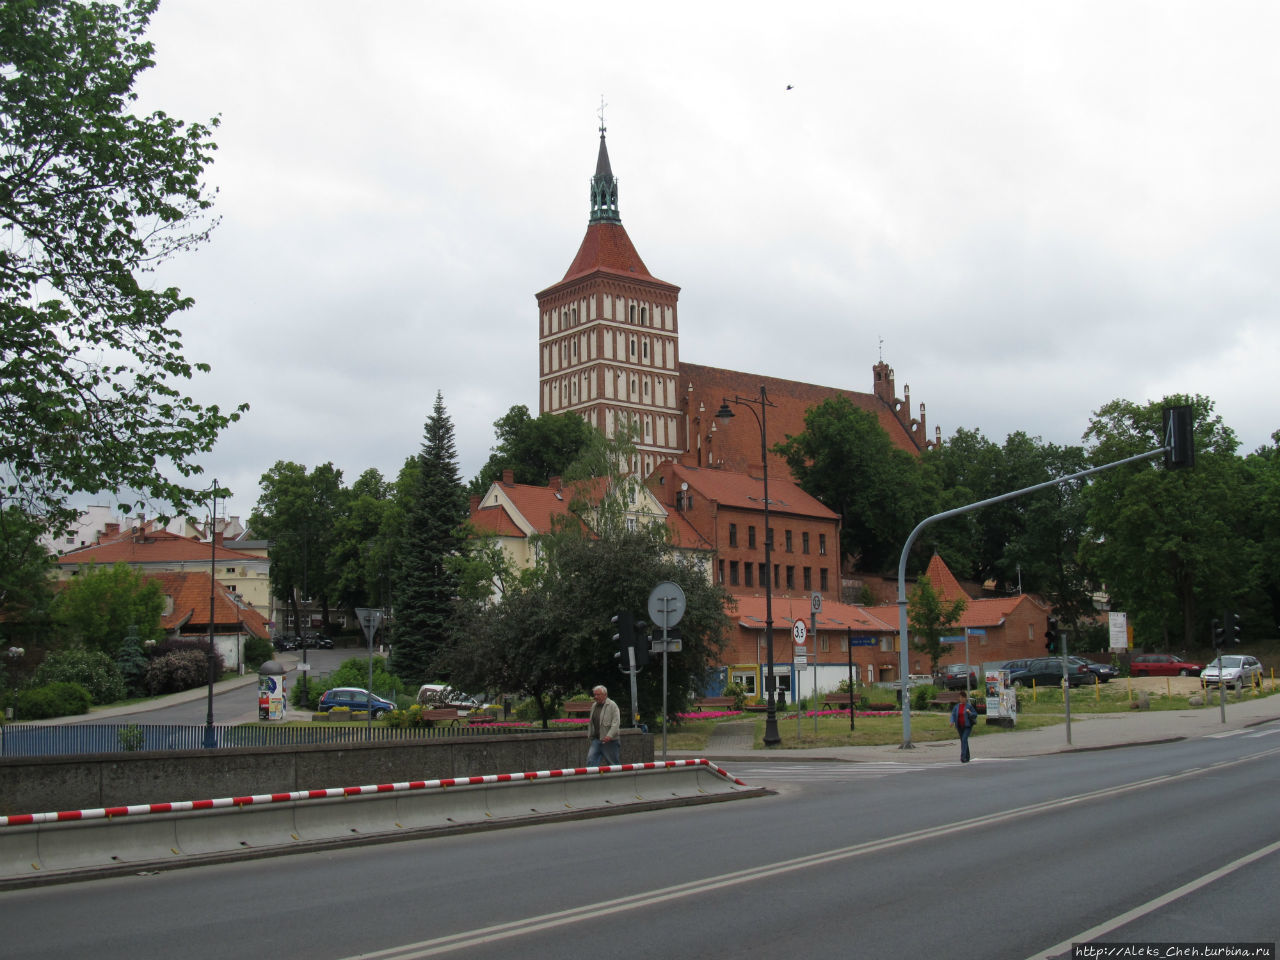 Bazylika konkatedralna św. Jakuba
Базилика Св. Якуба Ольштын, Польша